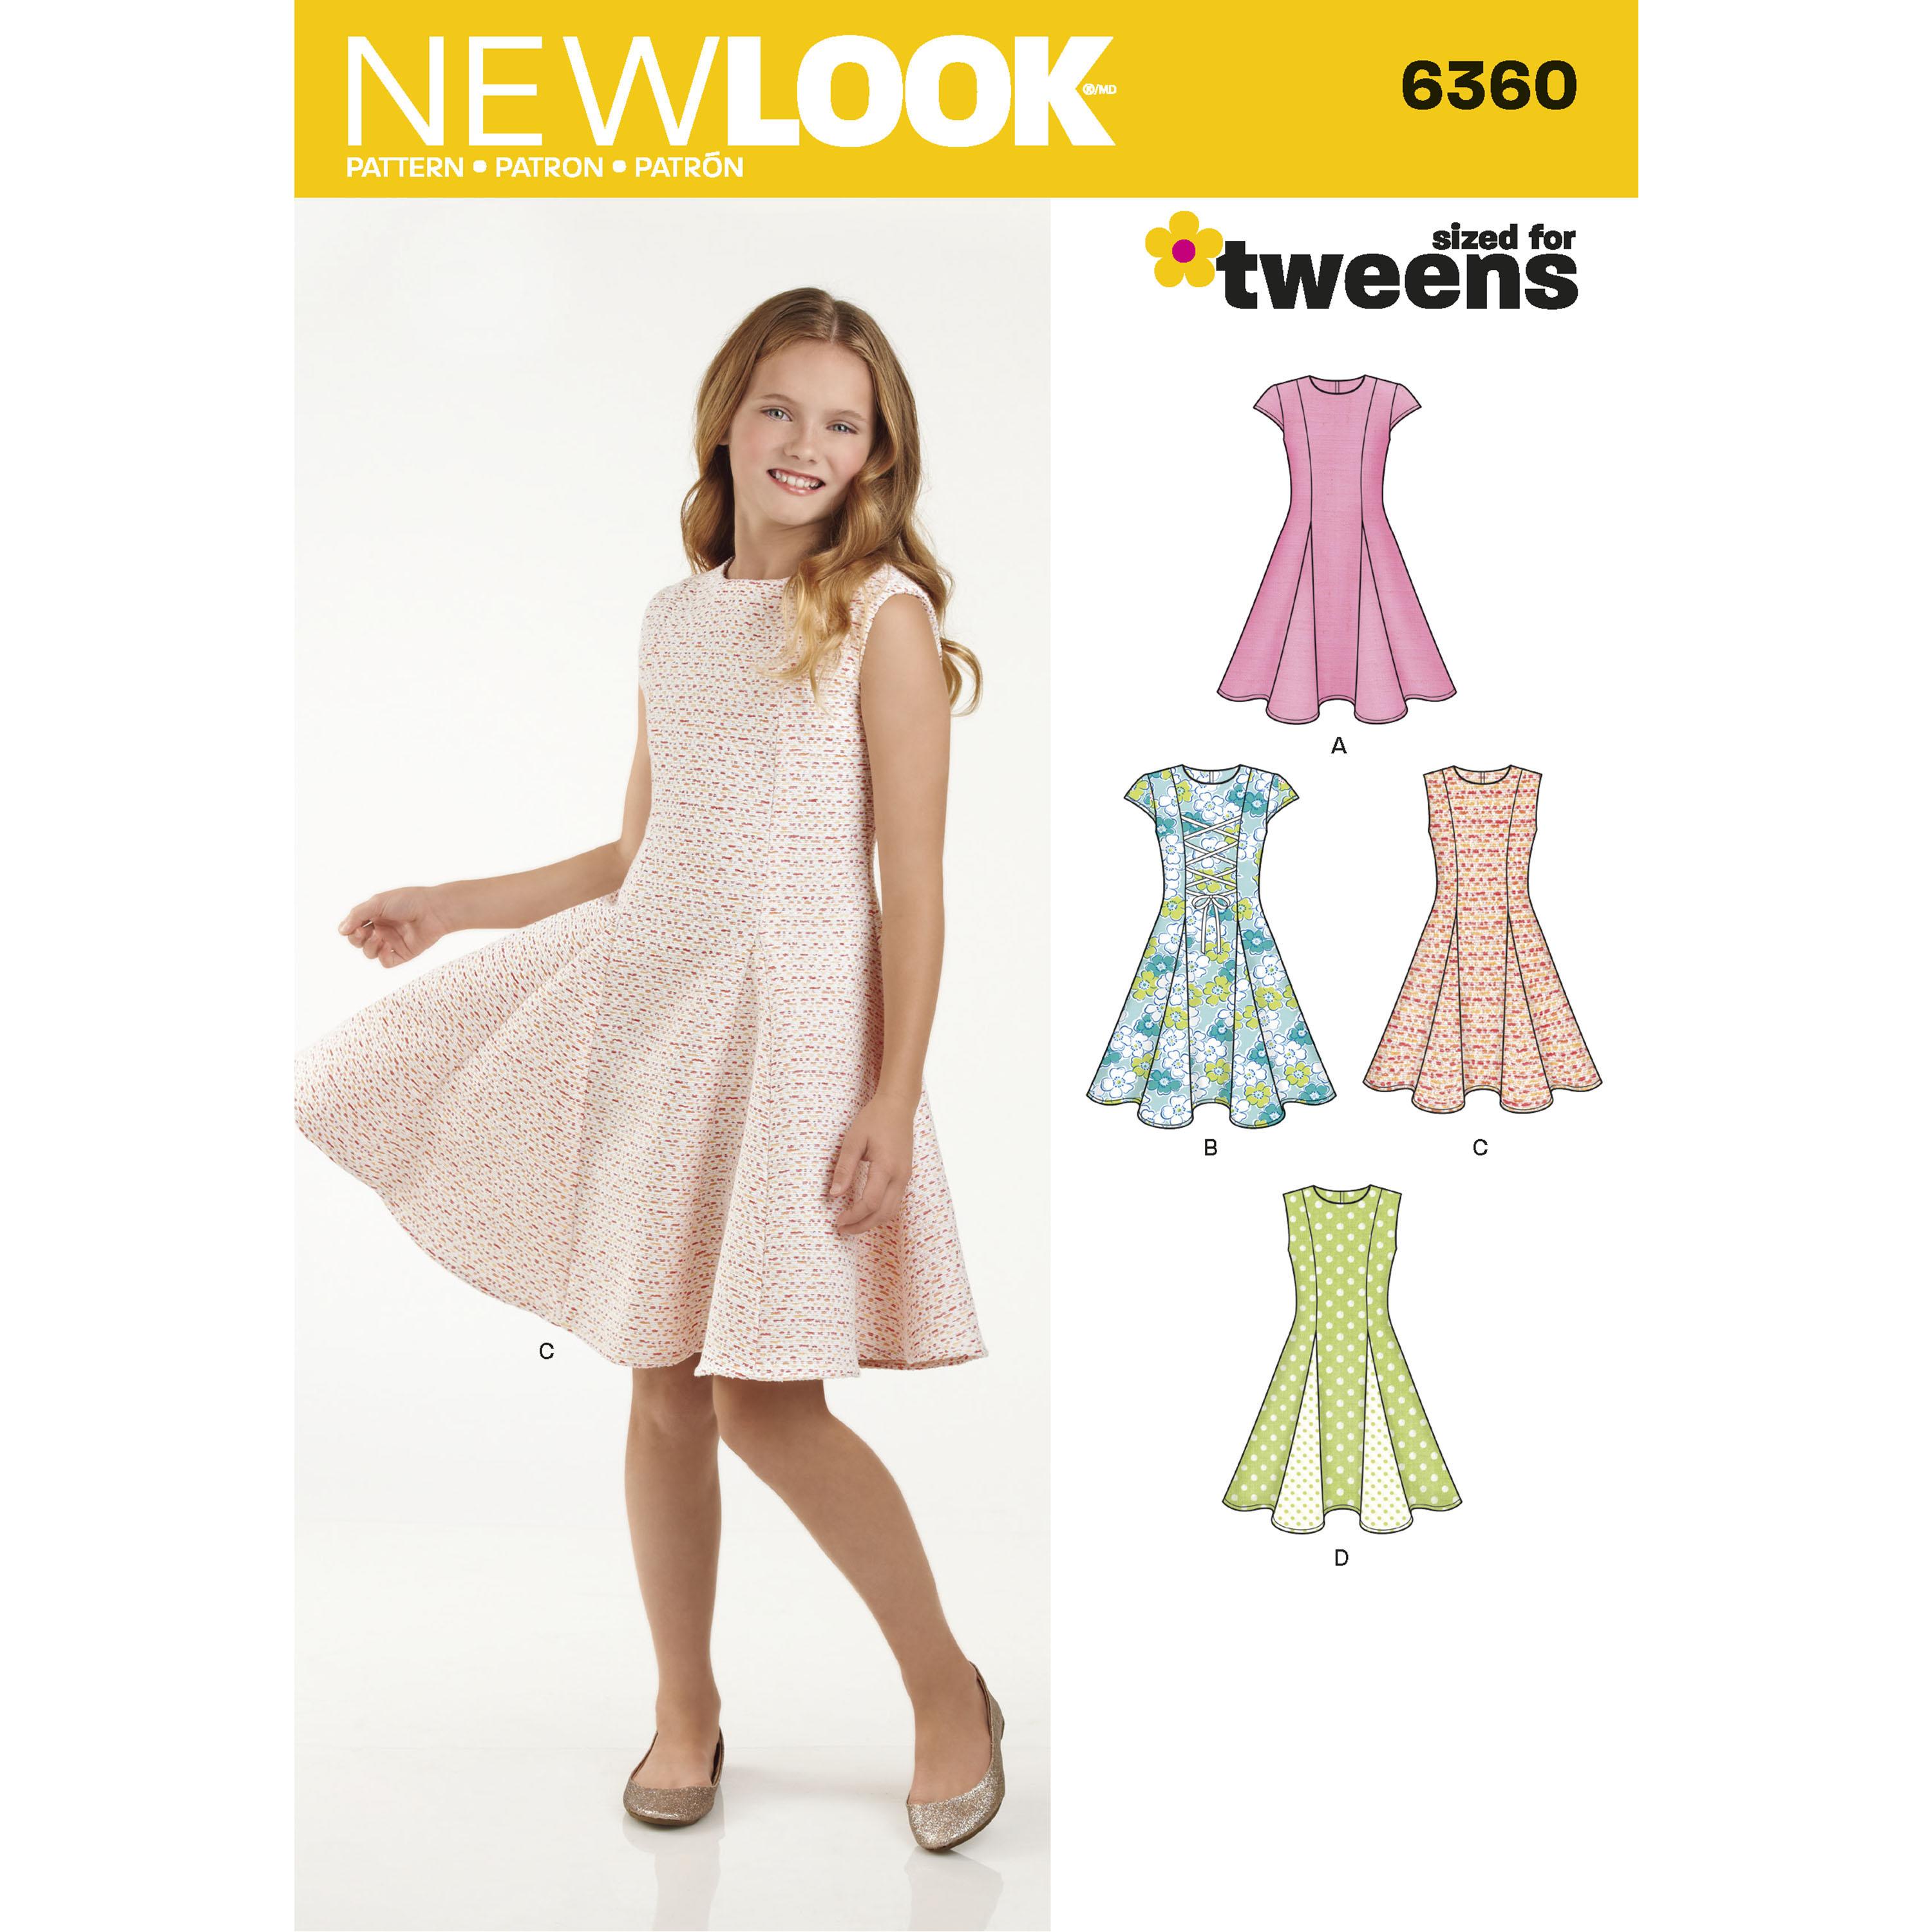 NewLook N6360 Girls' Sized for Tweens Dress